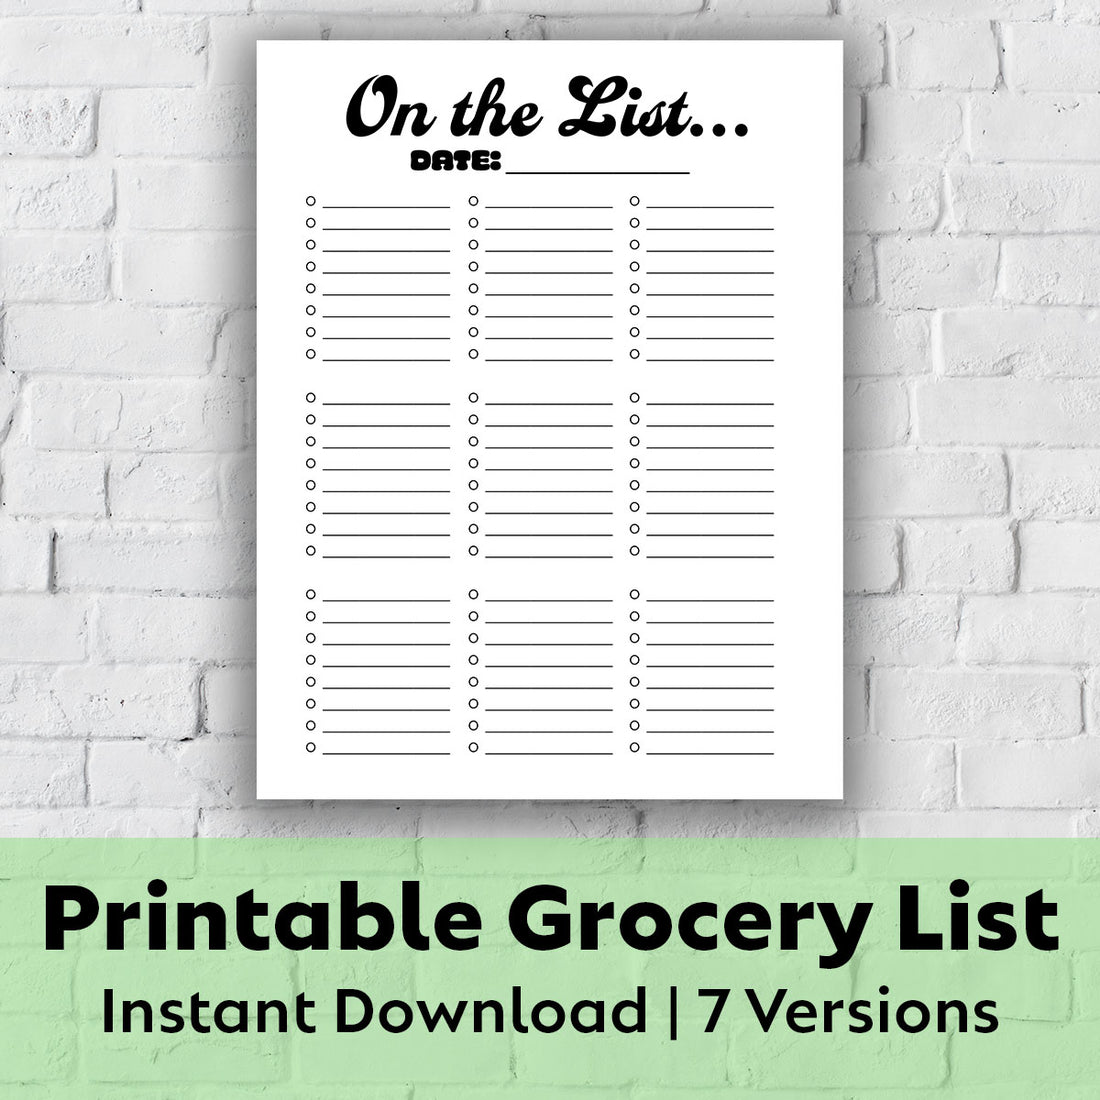 Printable Grocery List - On the List...